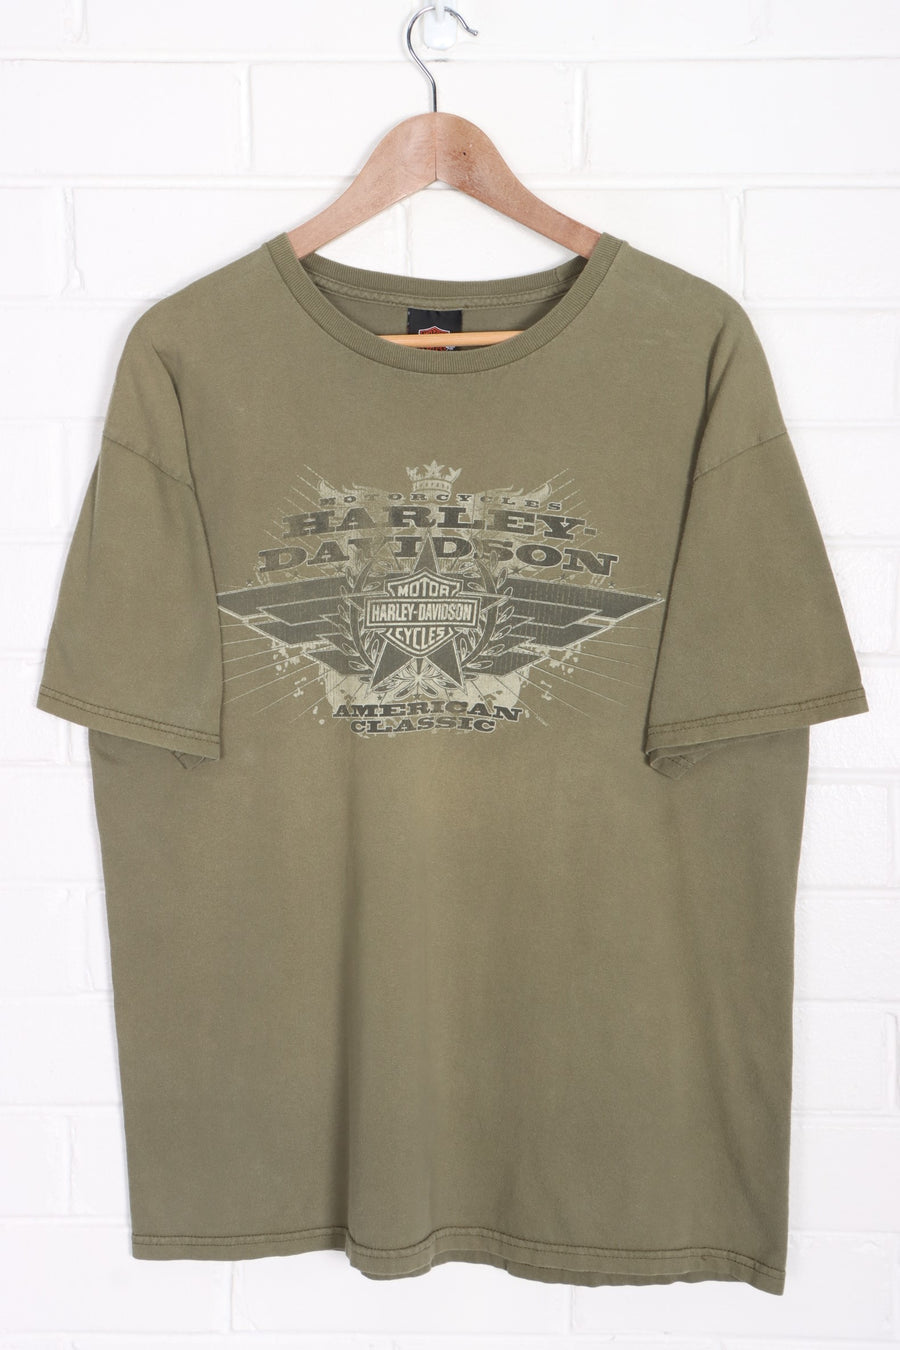 Big Island HARLEY DAVIDSON Army Green Front Back T-Shirt (L)